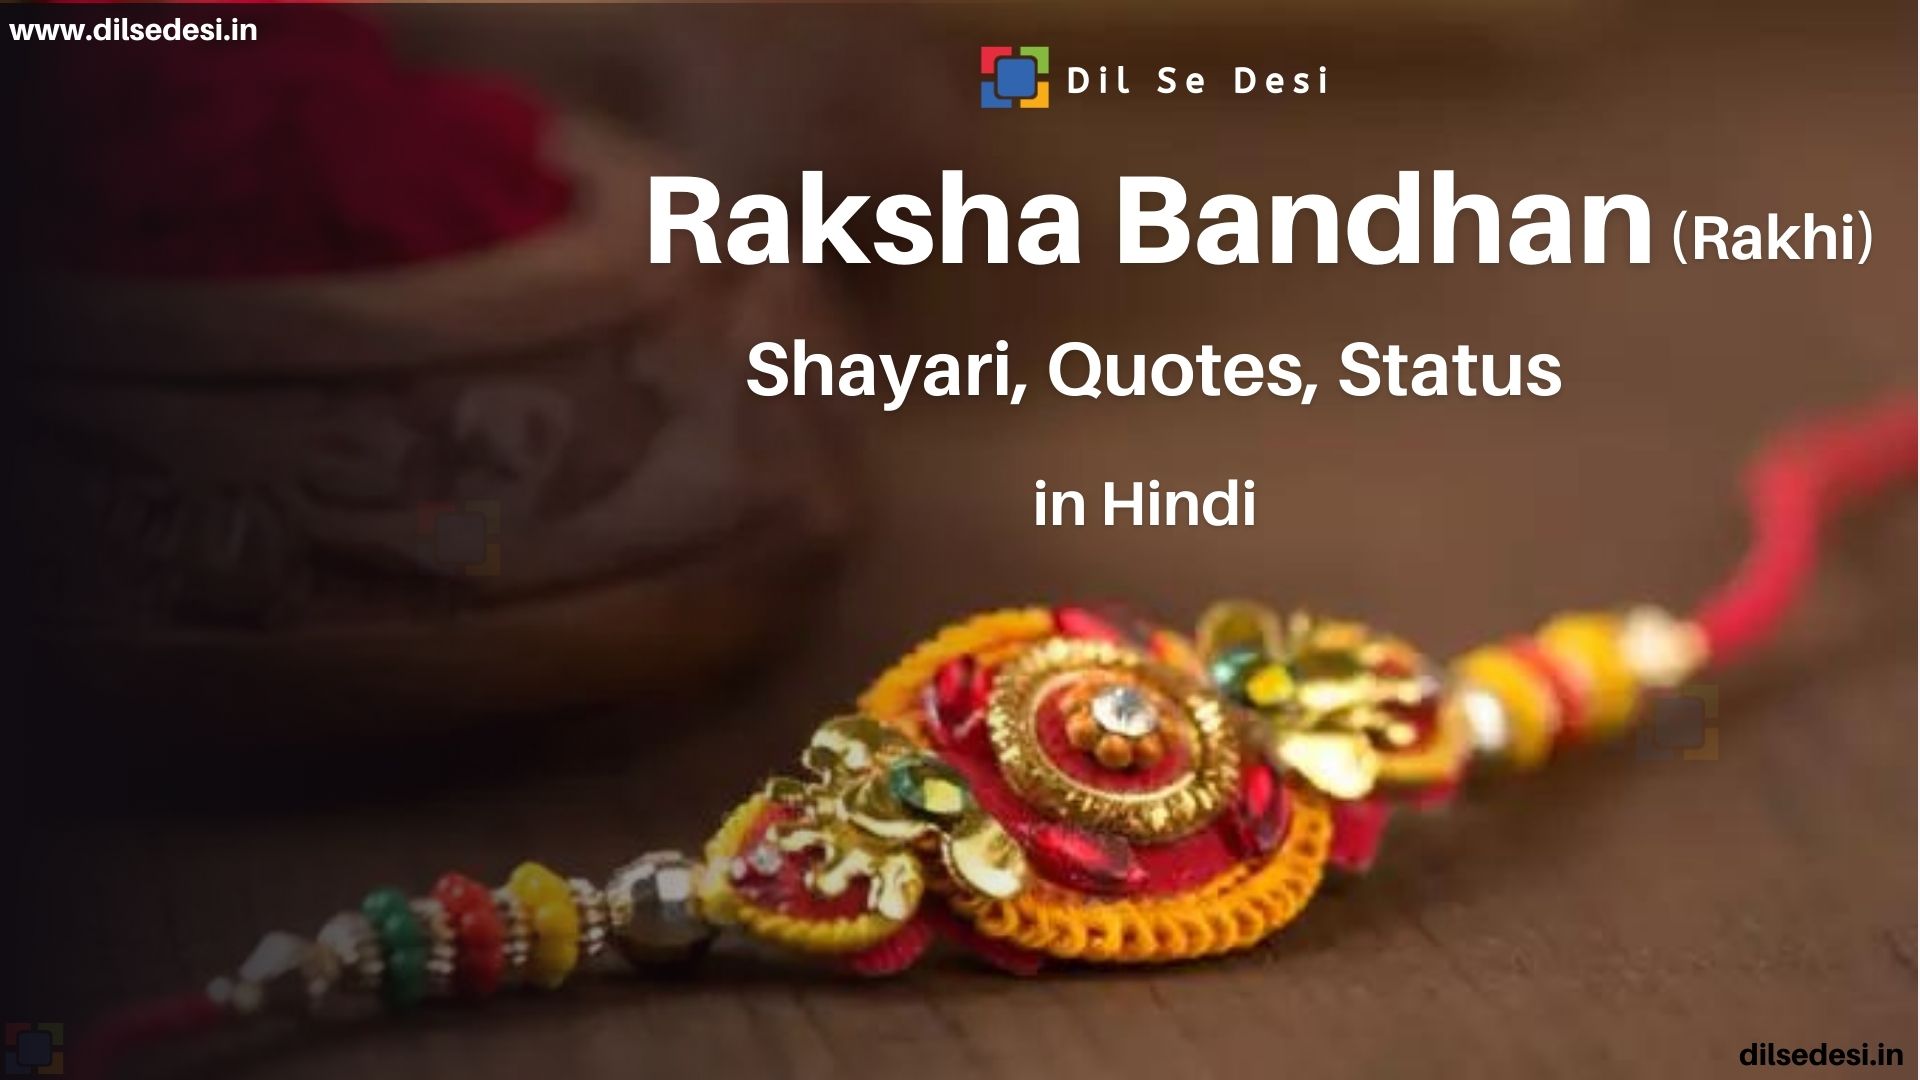 Raksha Bandhan (Rakhi) Shayari, Quotes, Status in Hindi